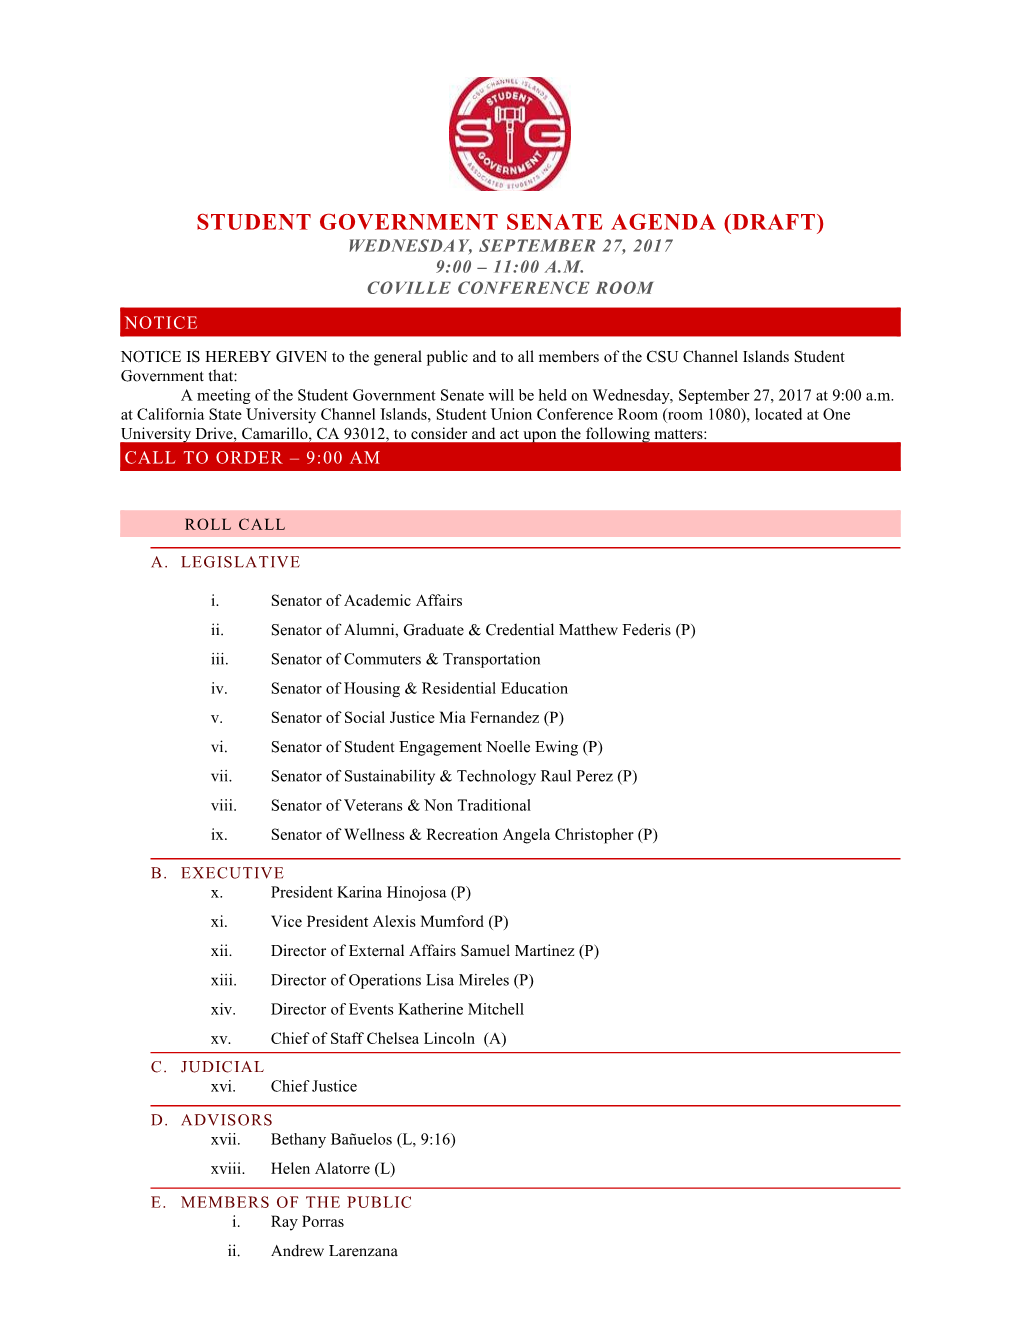 STUDENT GOVERNMENT SENATE AGENDA (Draft)